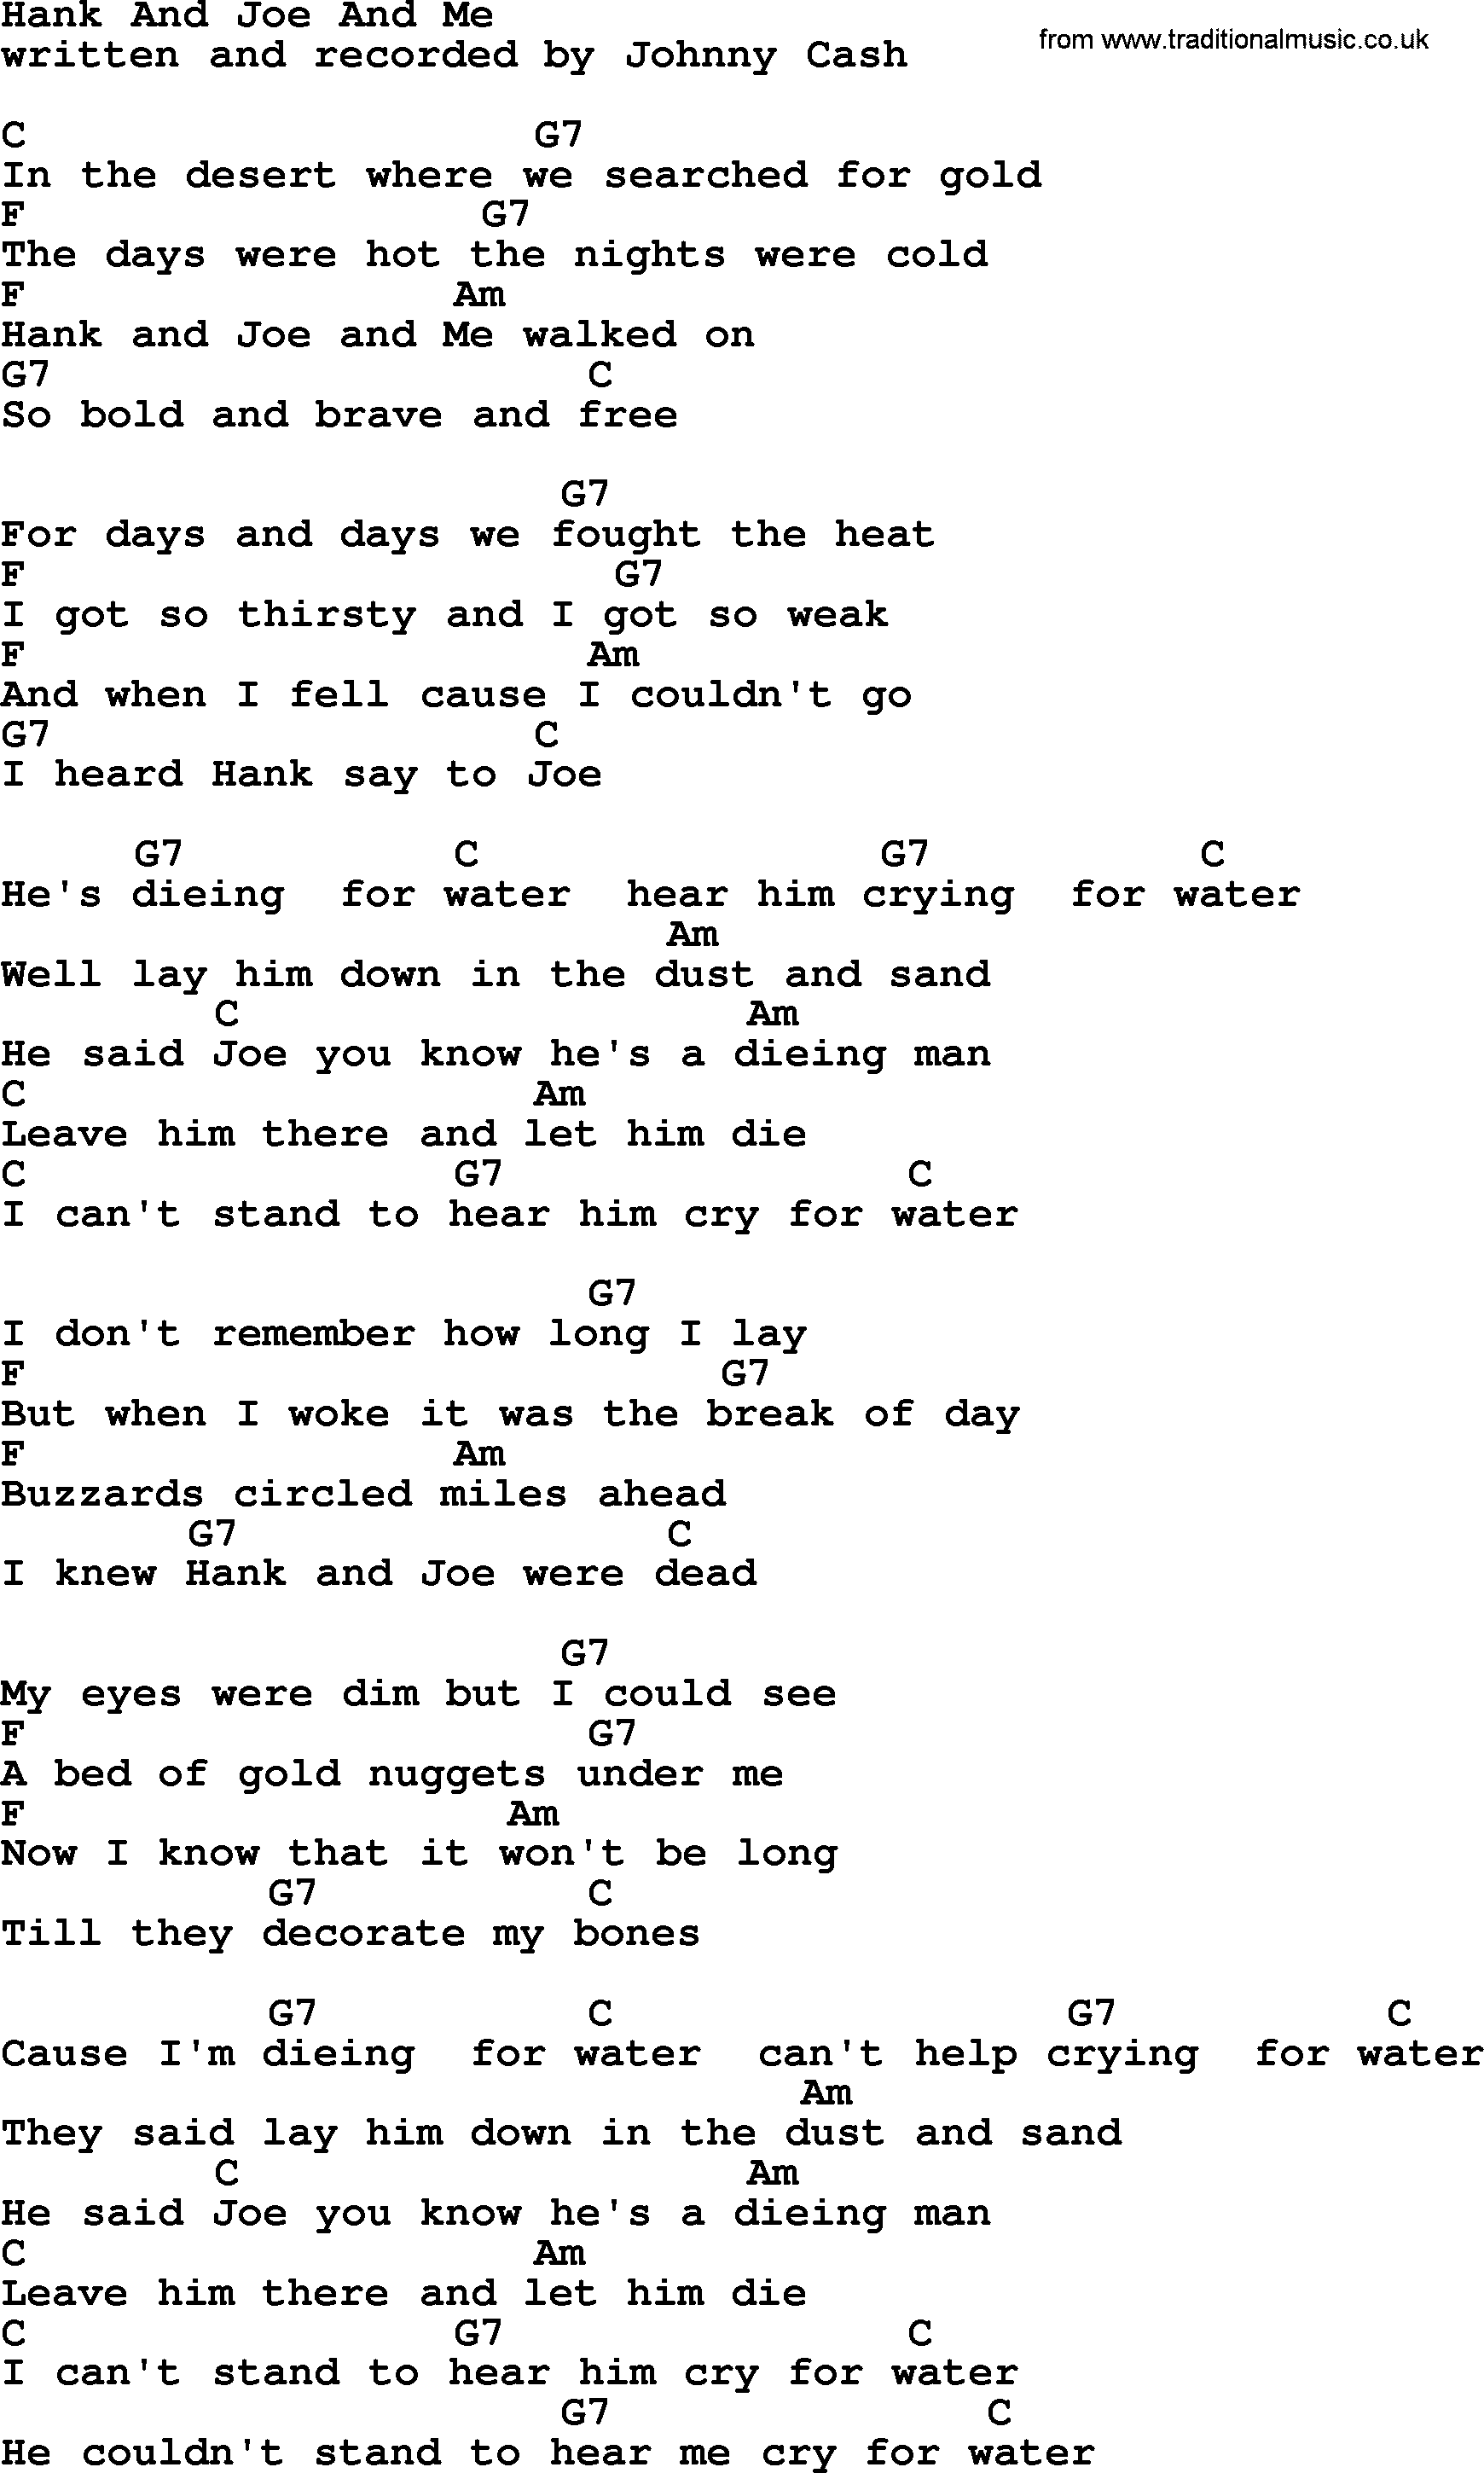 Johnny Cash song Hank And Joe And Me, lyrics and chords